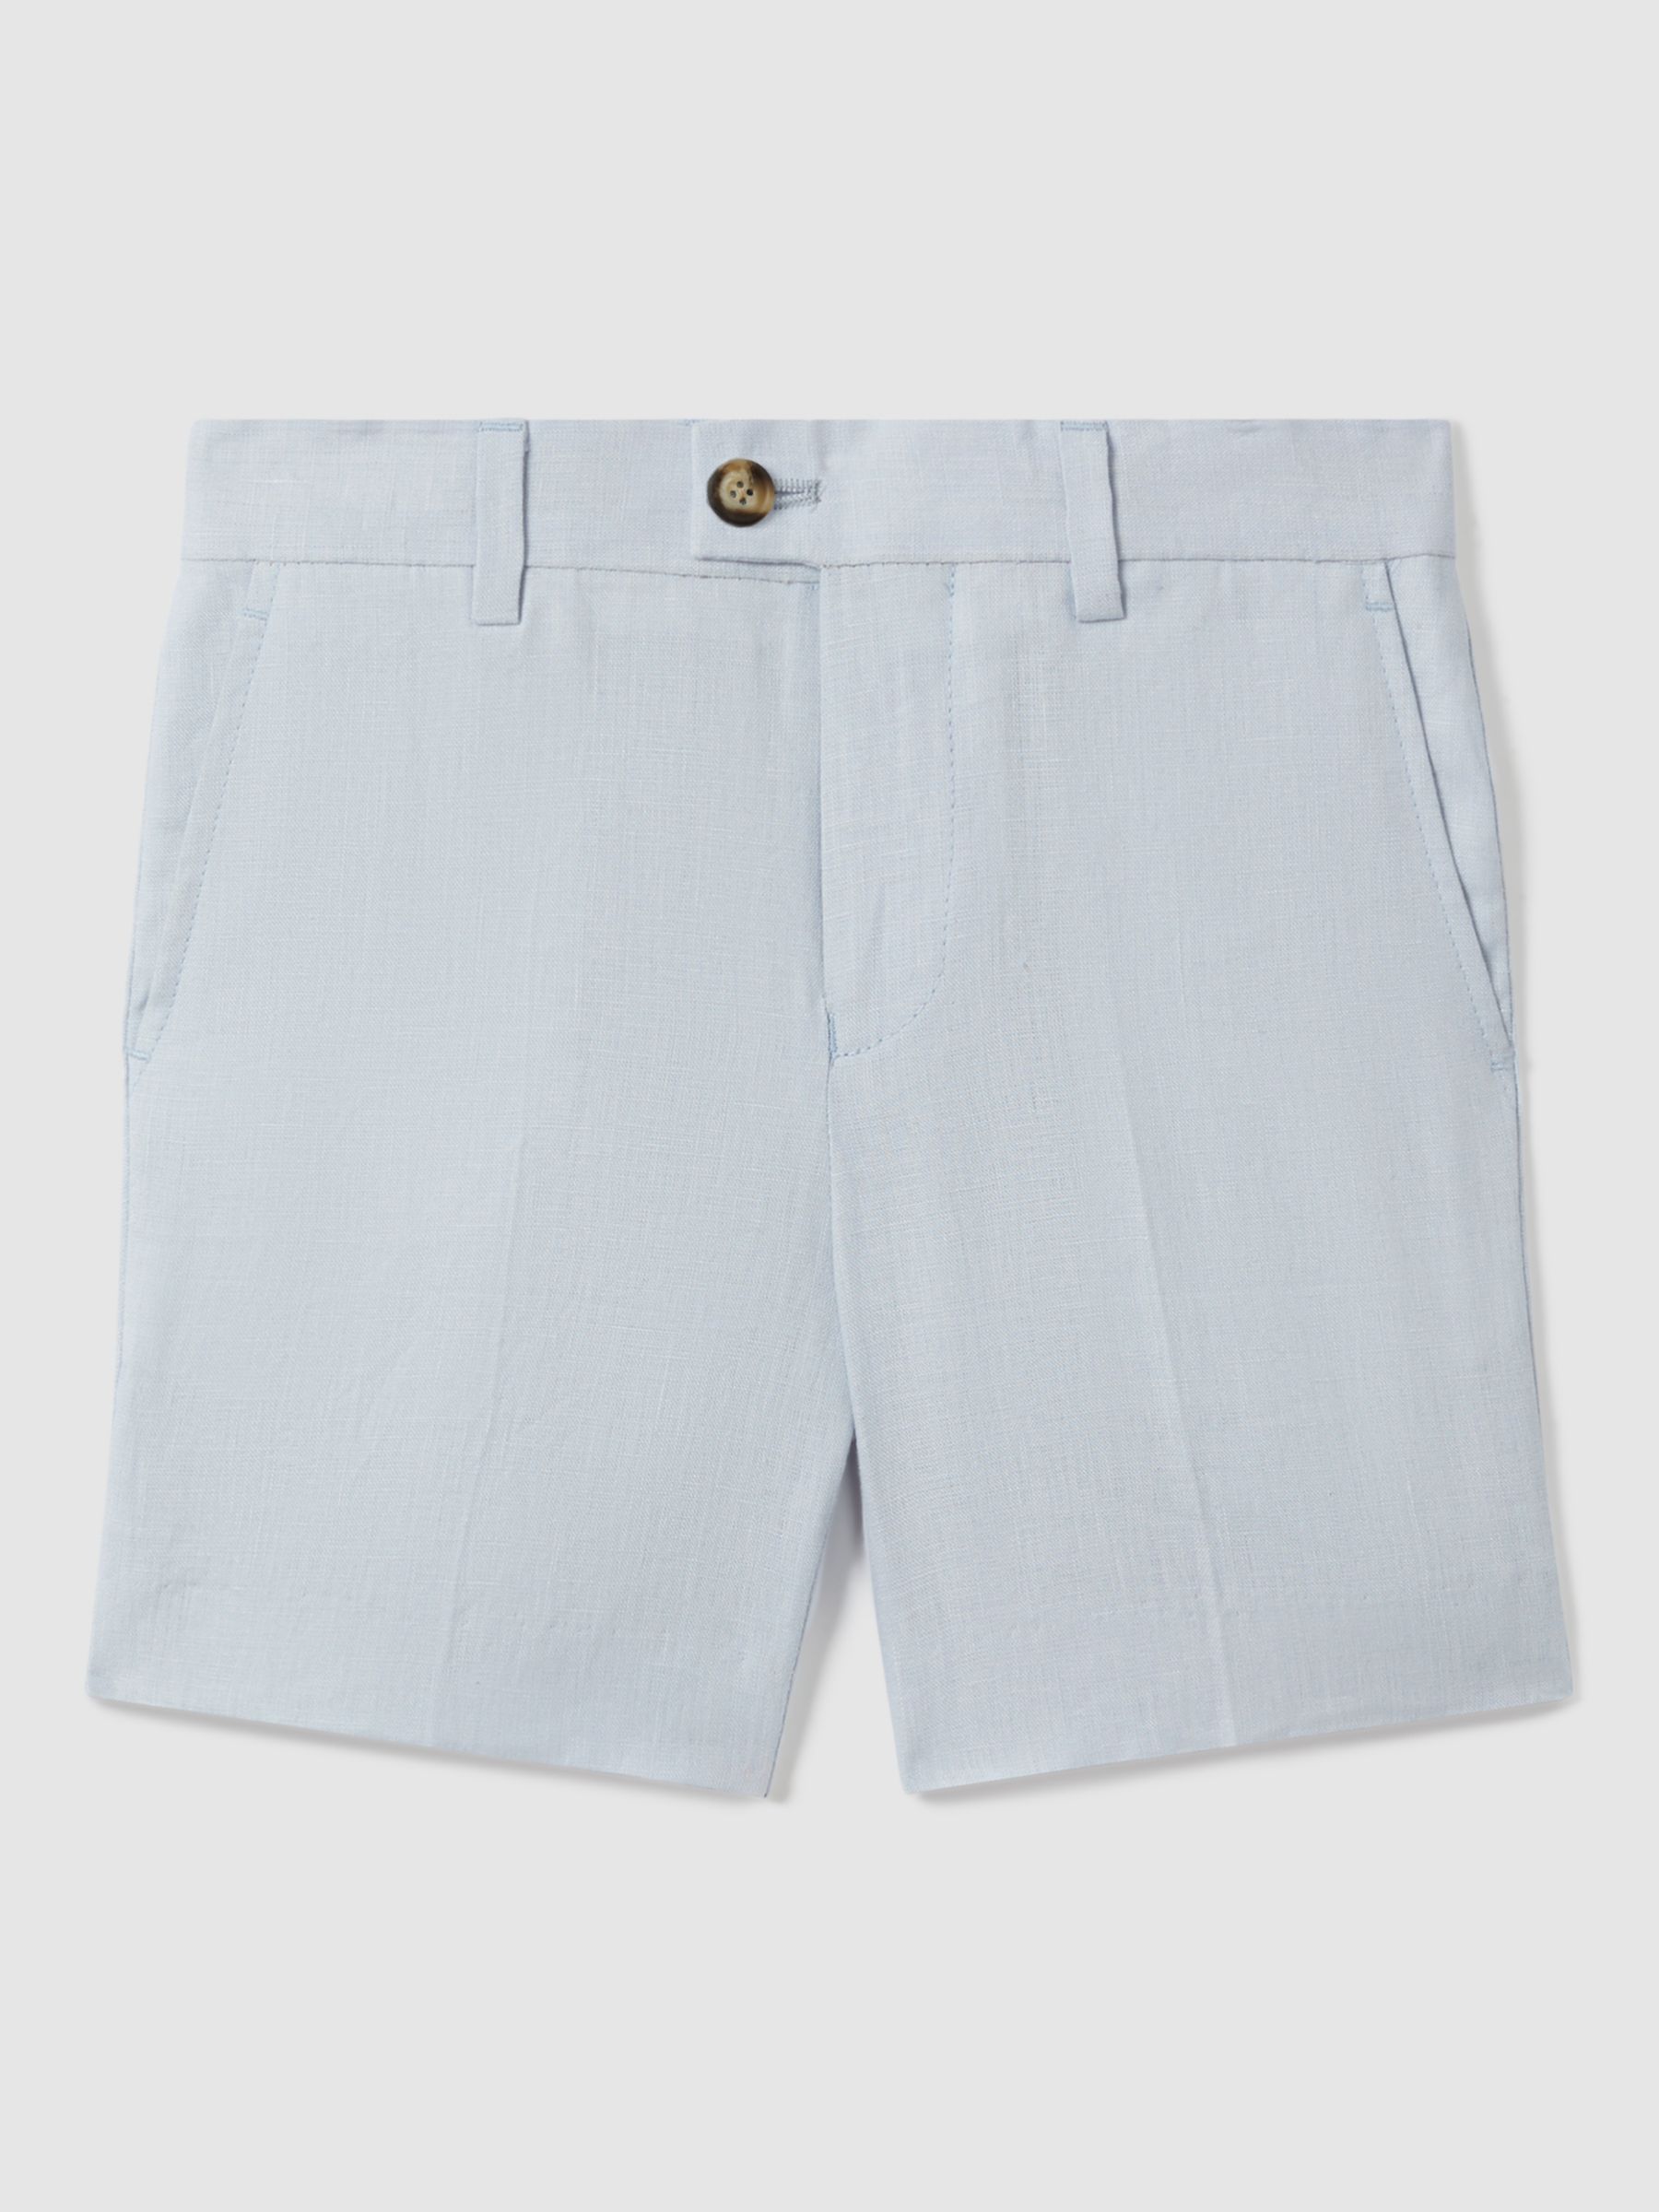 Reiss Kids' Kin Linen Suit Shorts, Soft Blue, 7-8 years